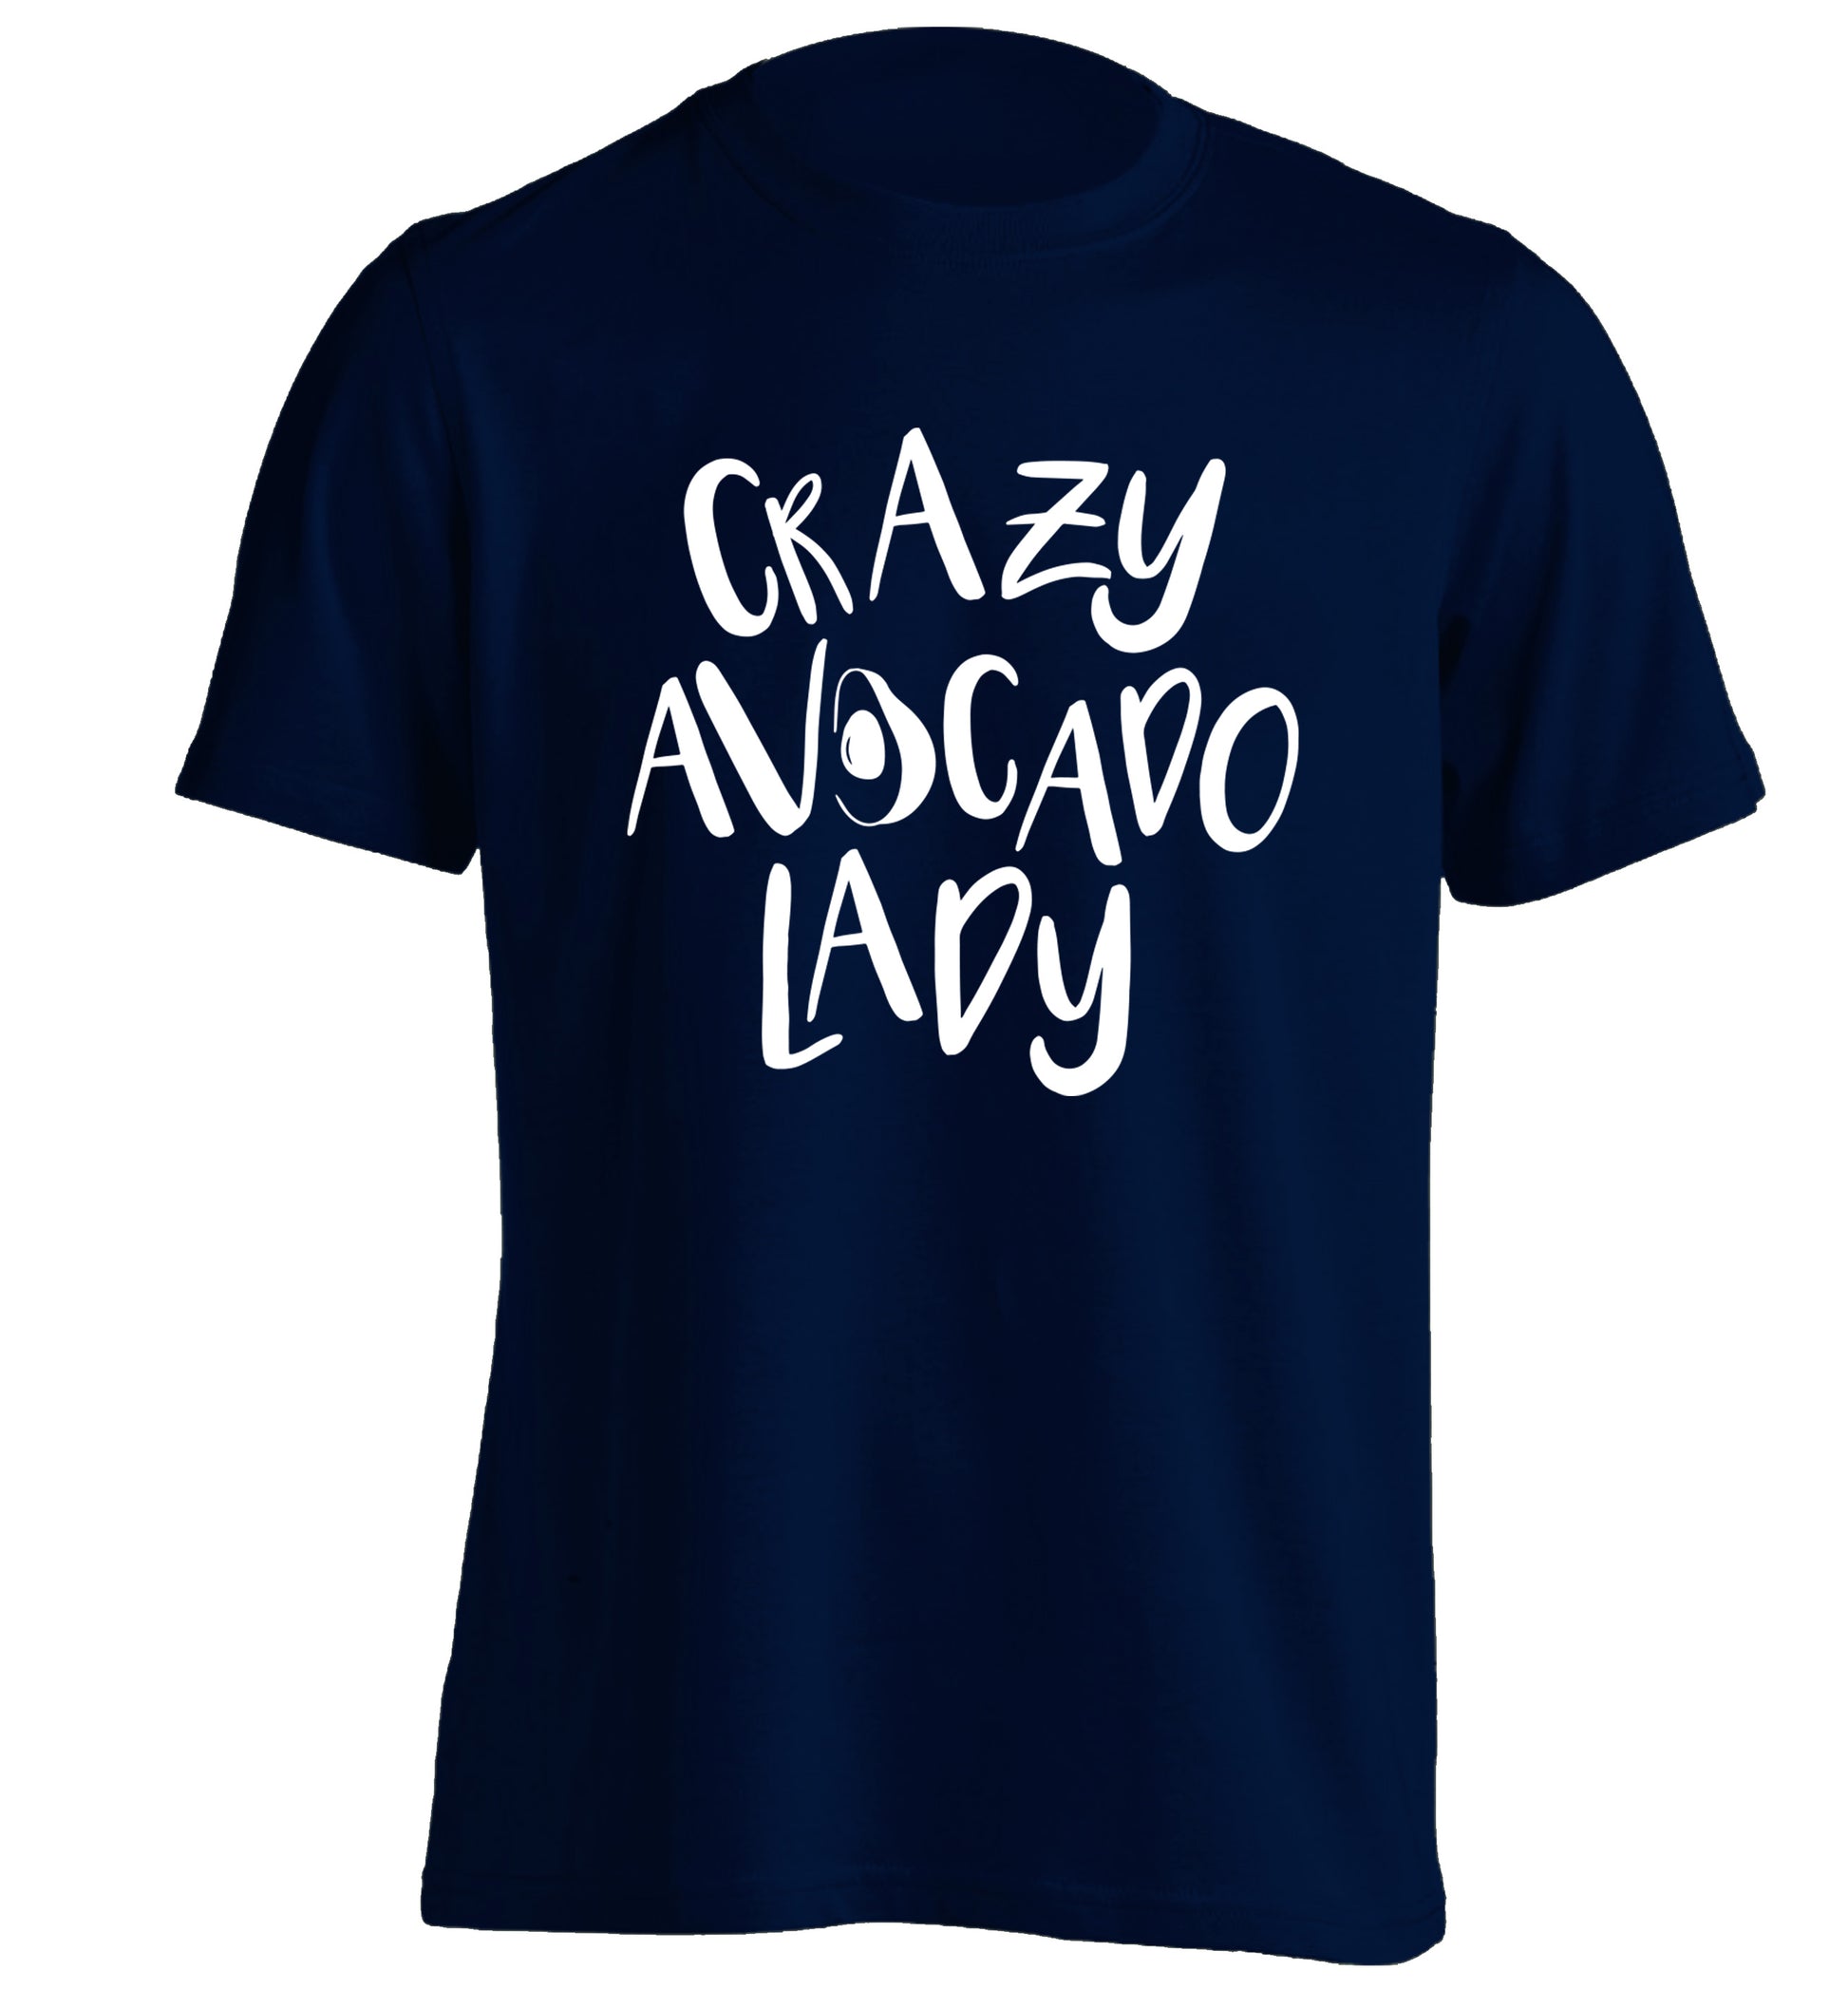 Crazy avocado lady adults unisex navy Tshirt 2XL